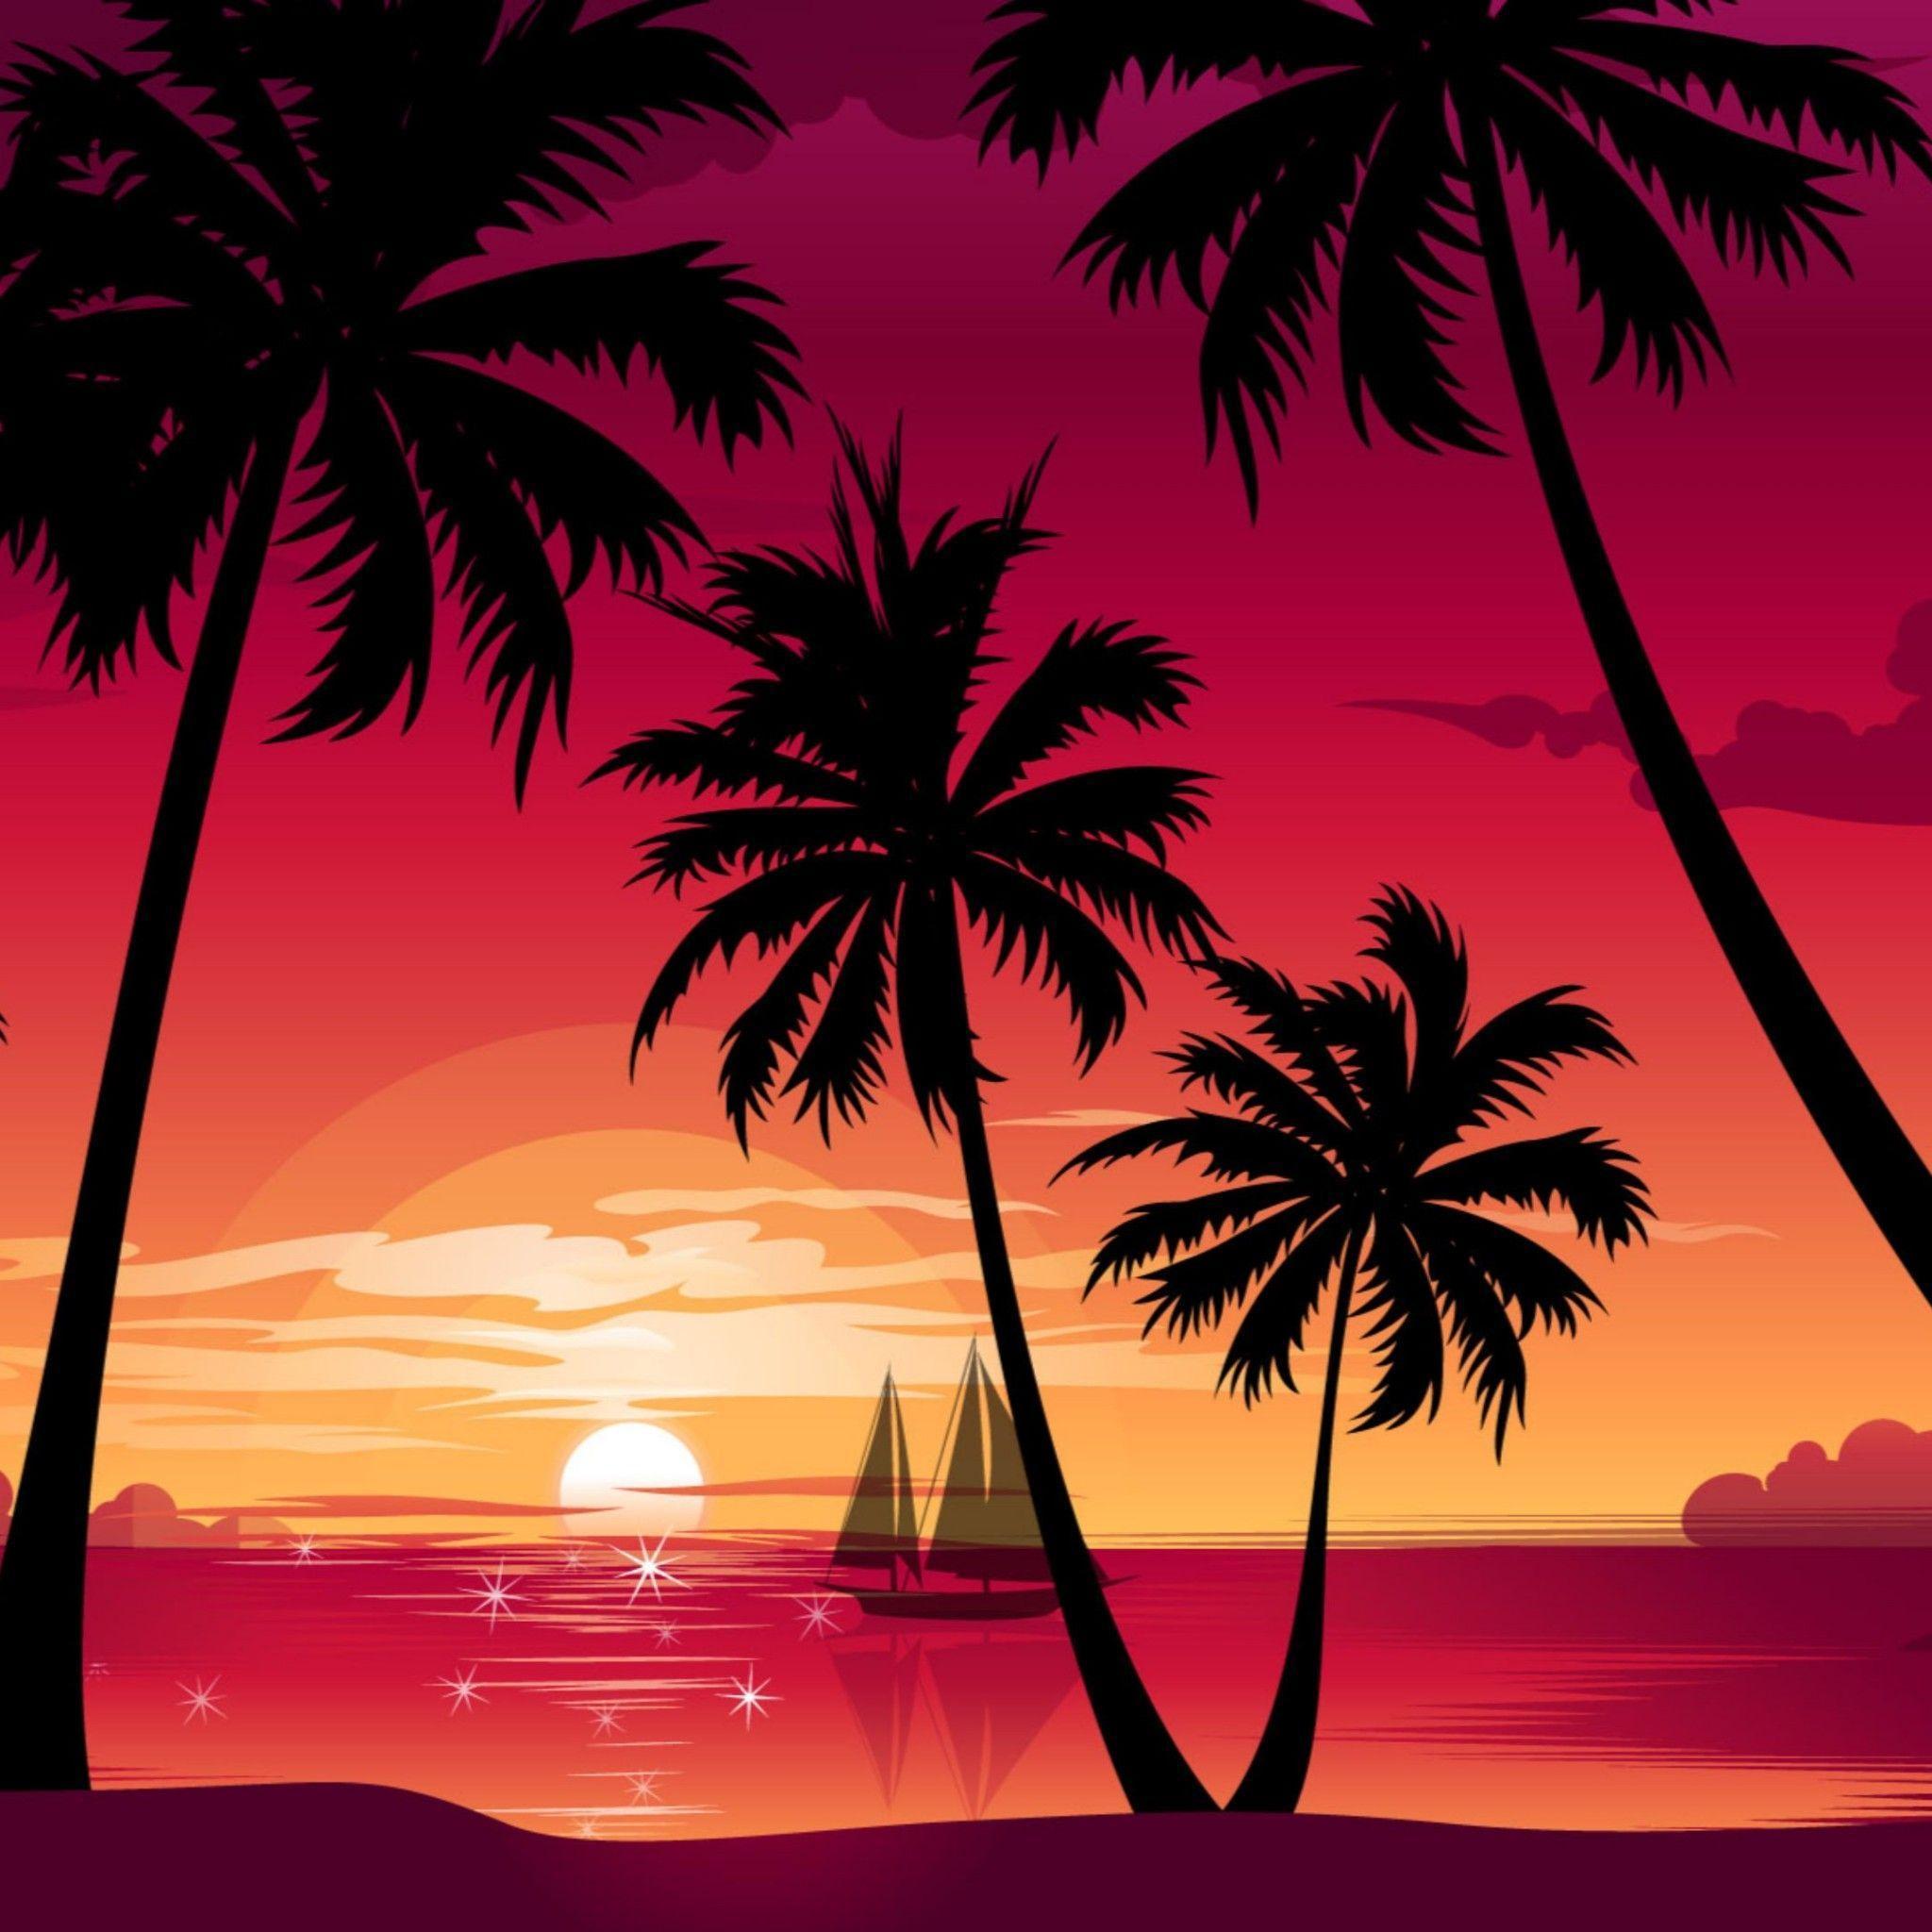 Sub Tropical 2016 Sunset 4K Wallpaper. Free 4K Wallpaper